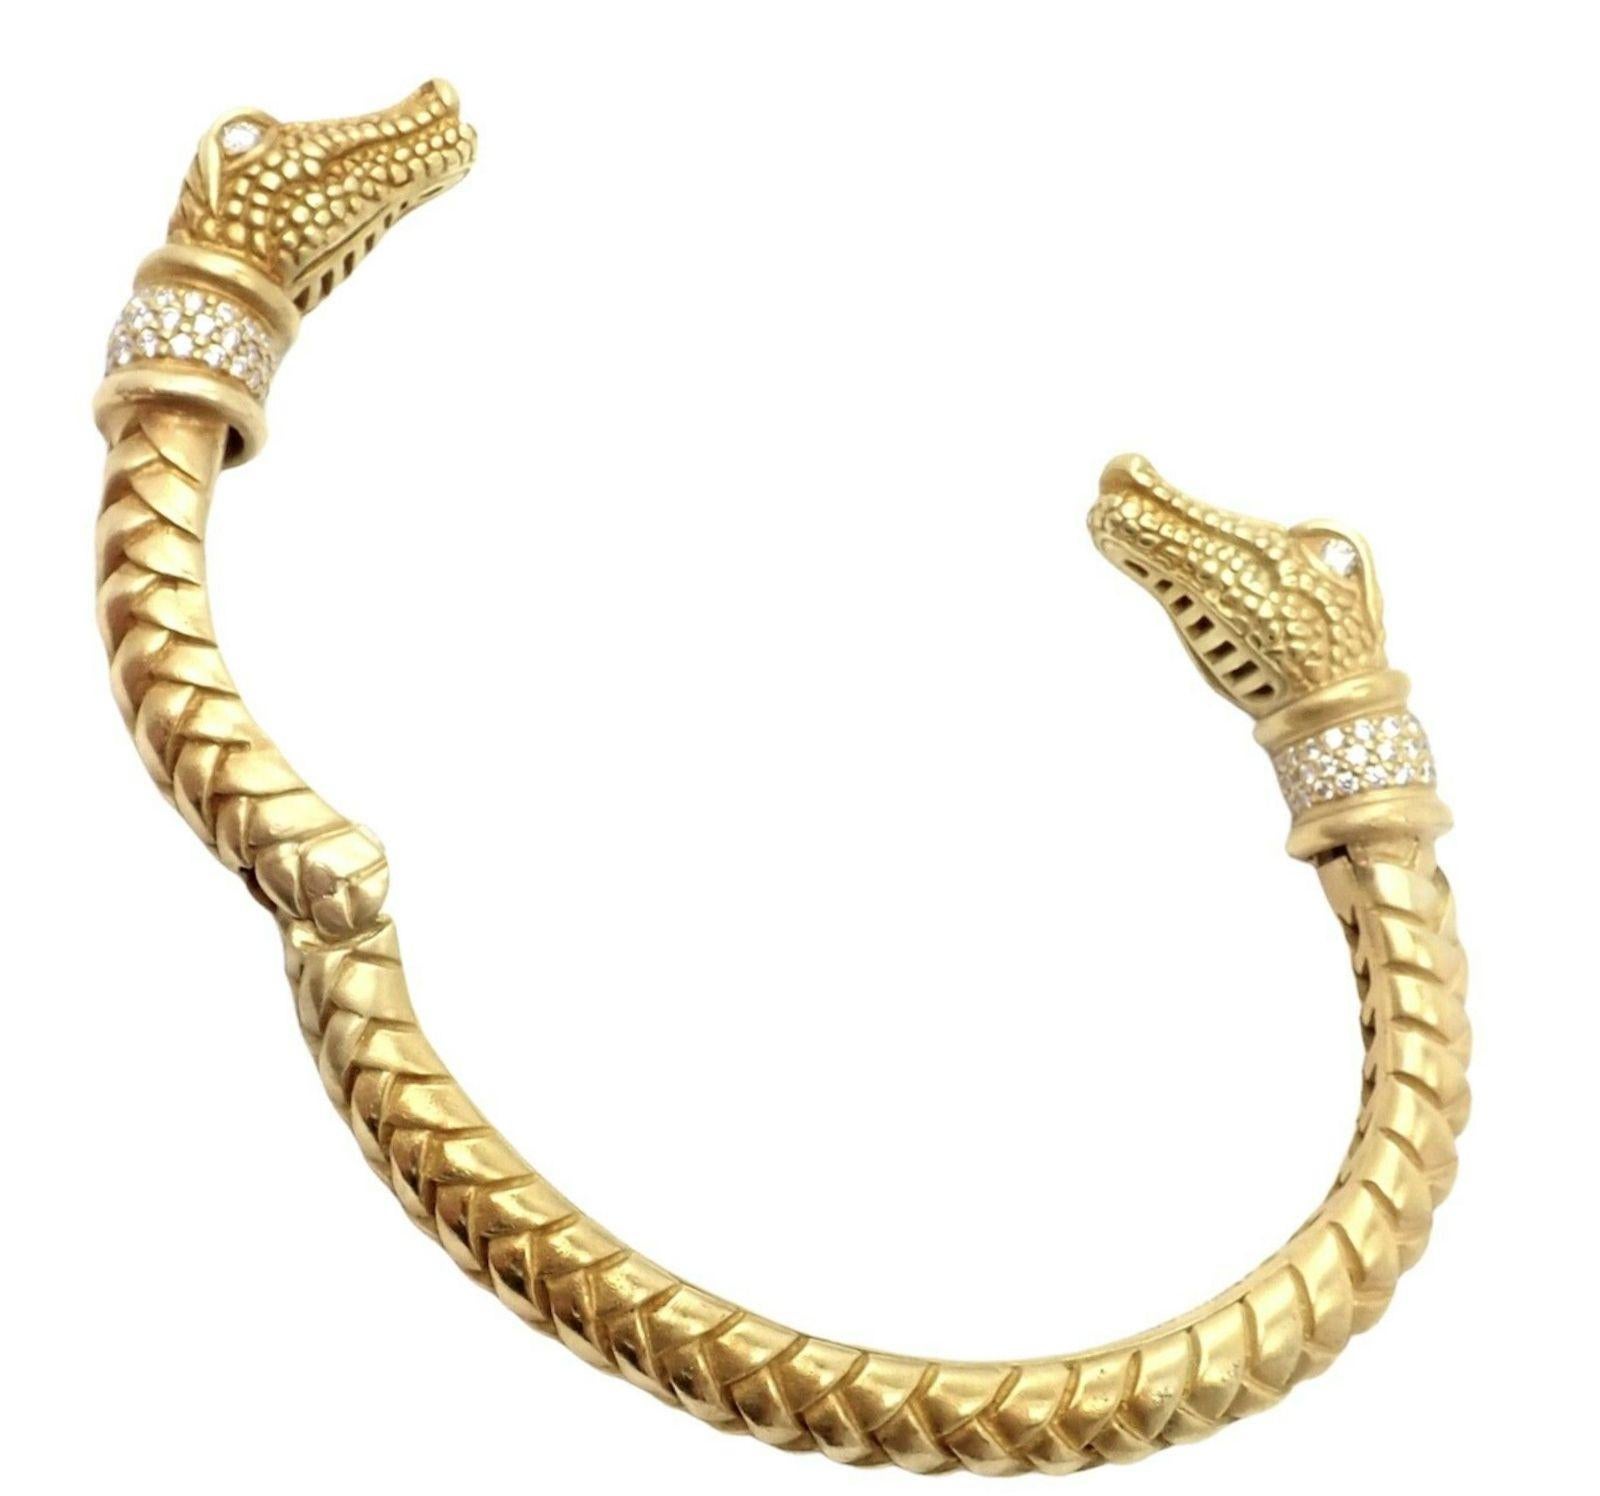 Brilliant Cut Kieselstein Cord Diamond Two Alligator Heads Yellow Gold Bangle Bracelet For Sale